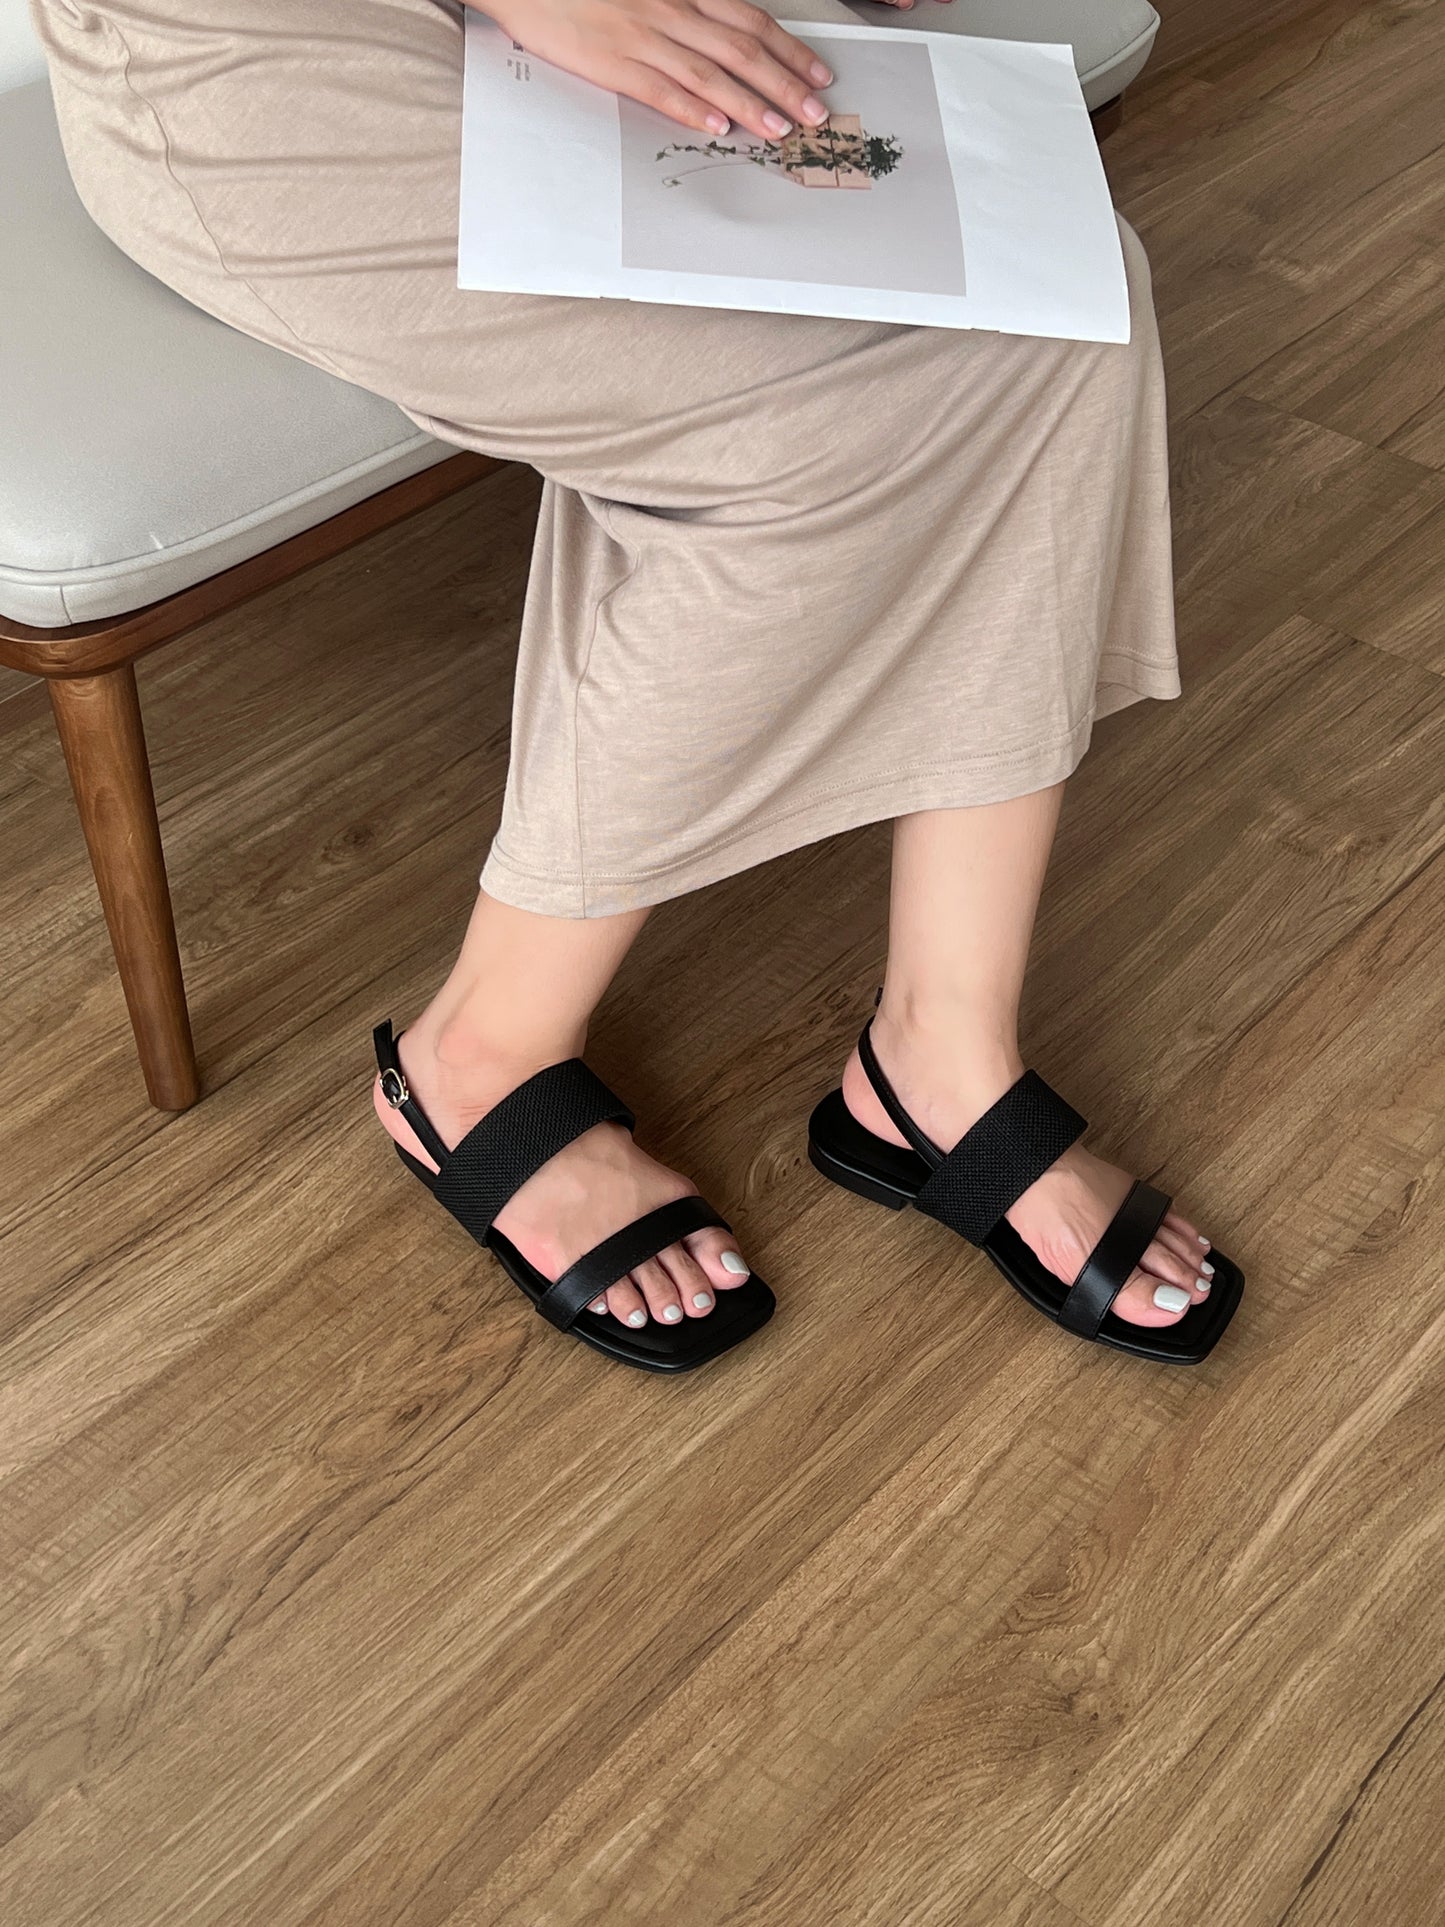 Tiara Roman Style Flat Sandals (Black)